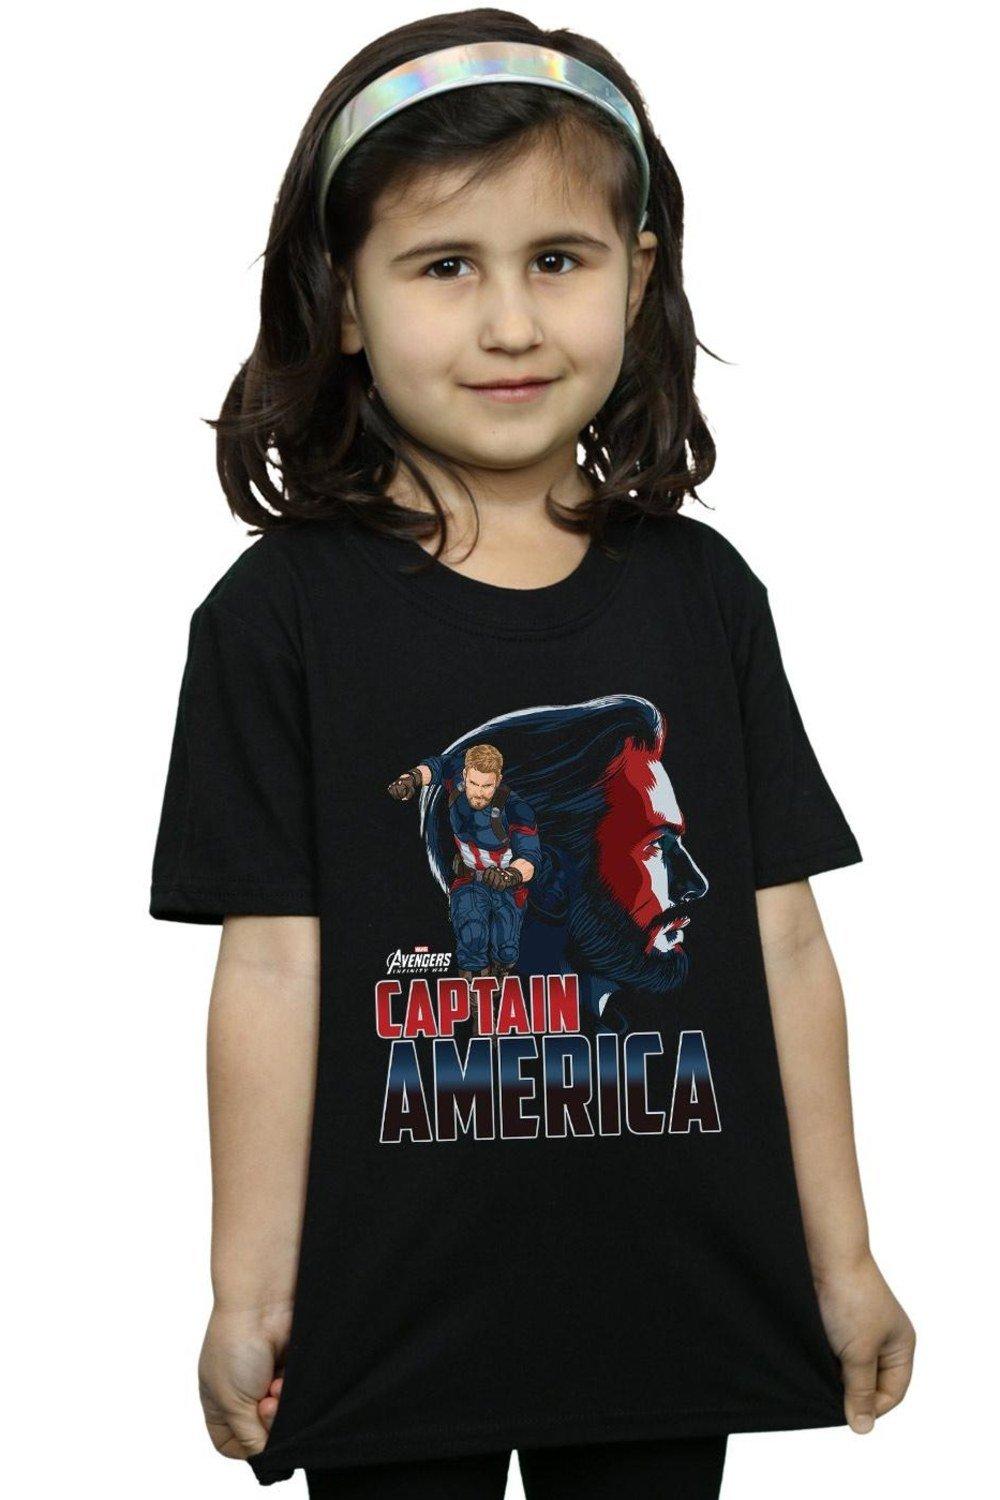 Avengers Infinity War Captain America Character Cotton T-Shirt